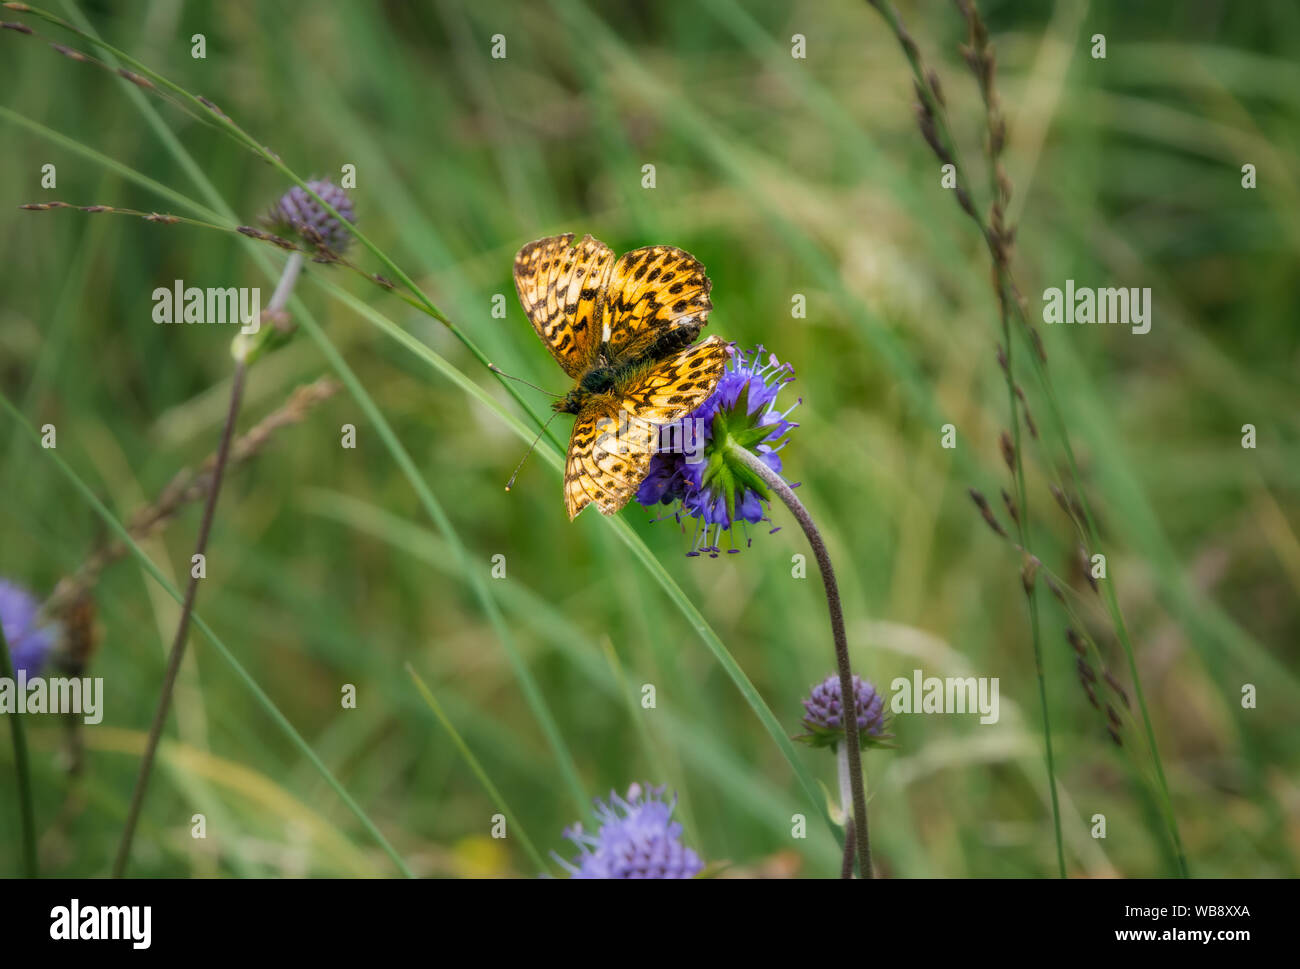 A Titania's fritillary butterfly (Boloria Titania) on a purple flower in a grass field in the Kaunergrat park (Austrian Alps) Stock Photo